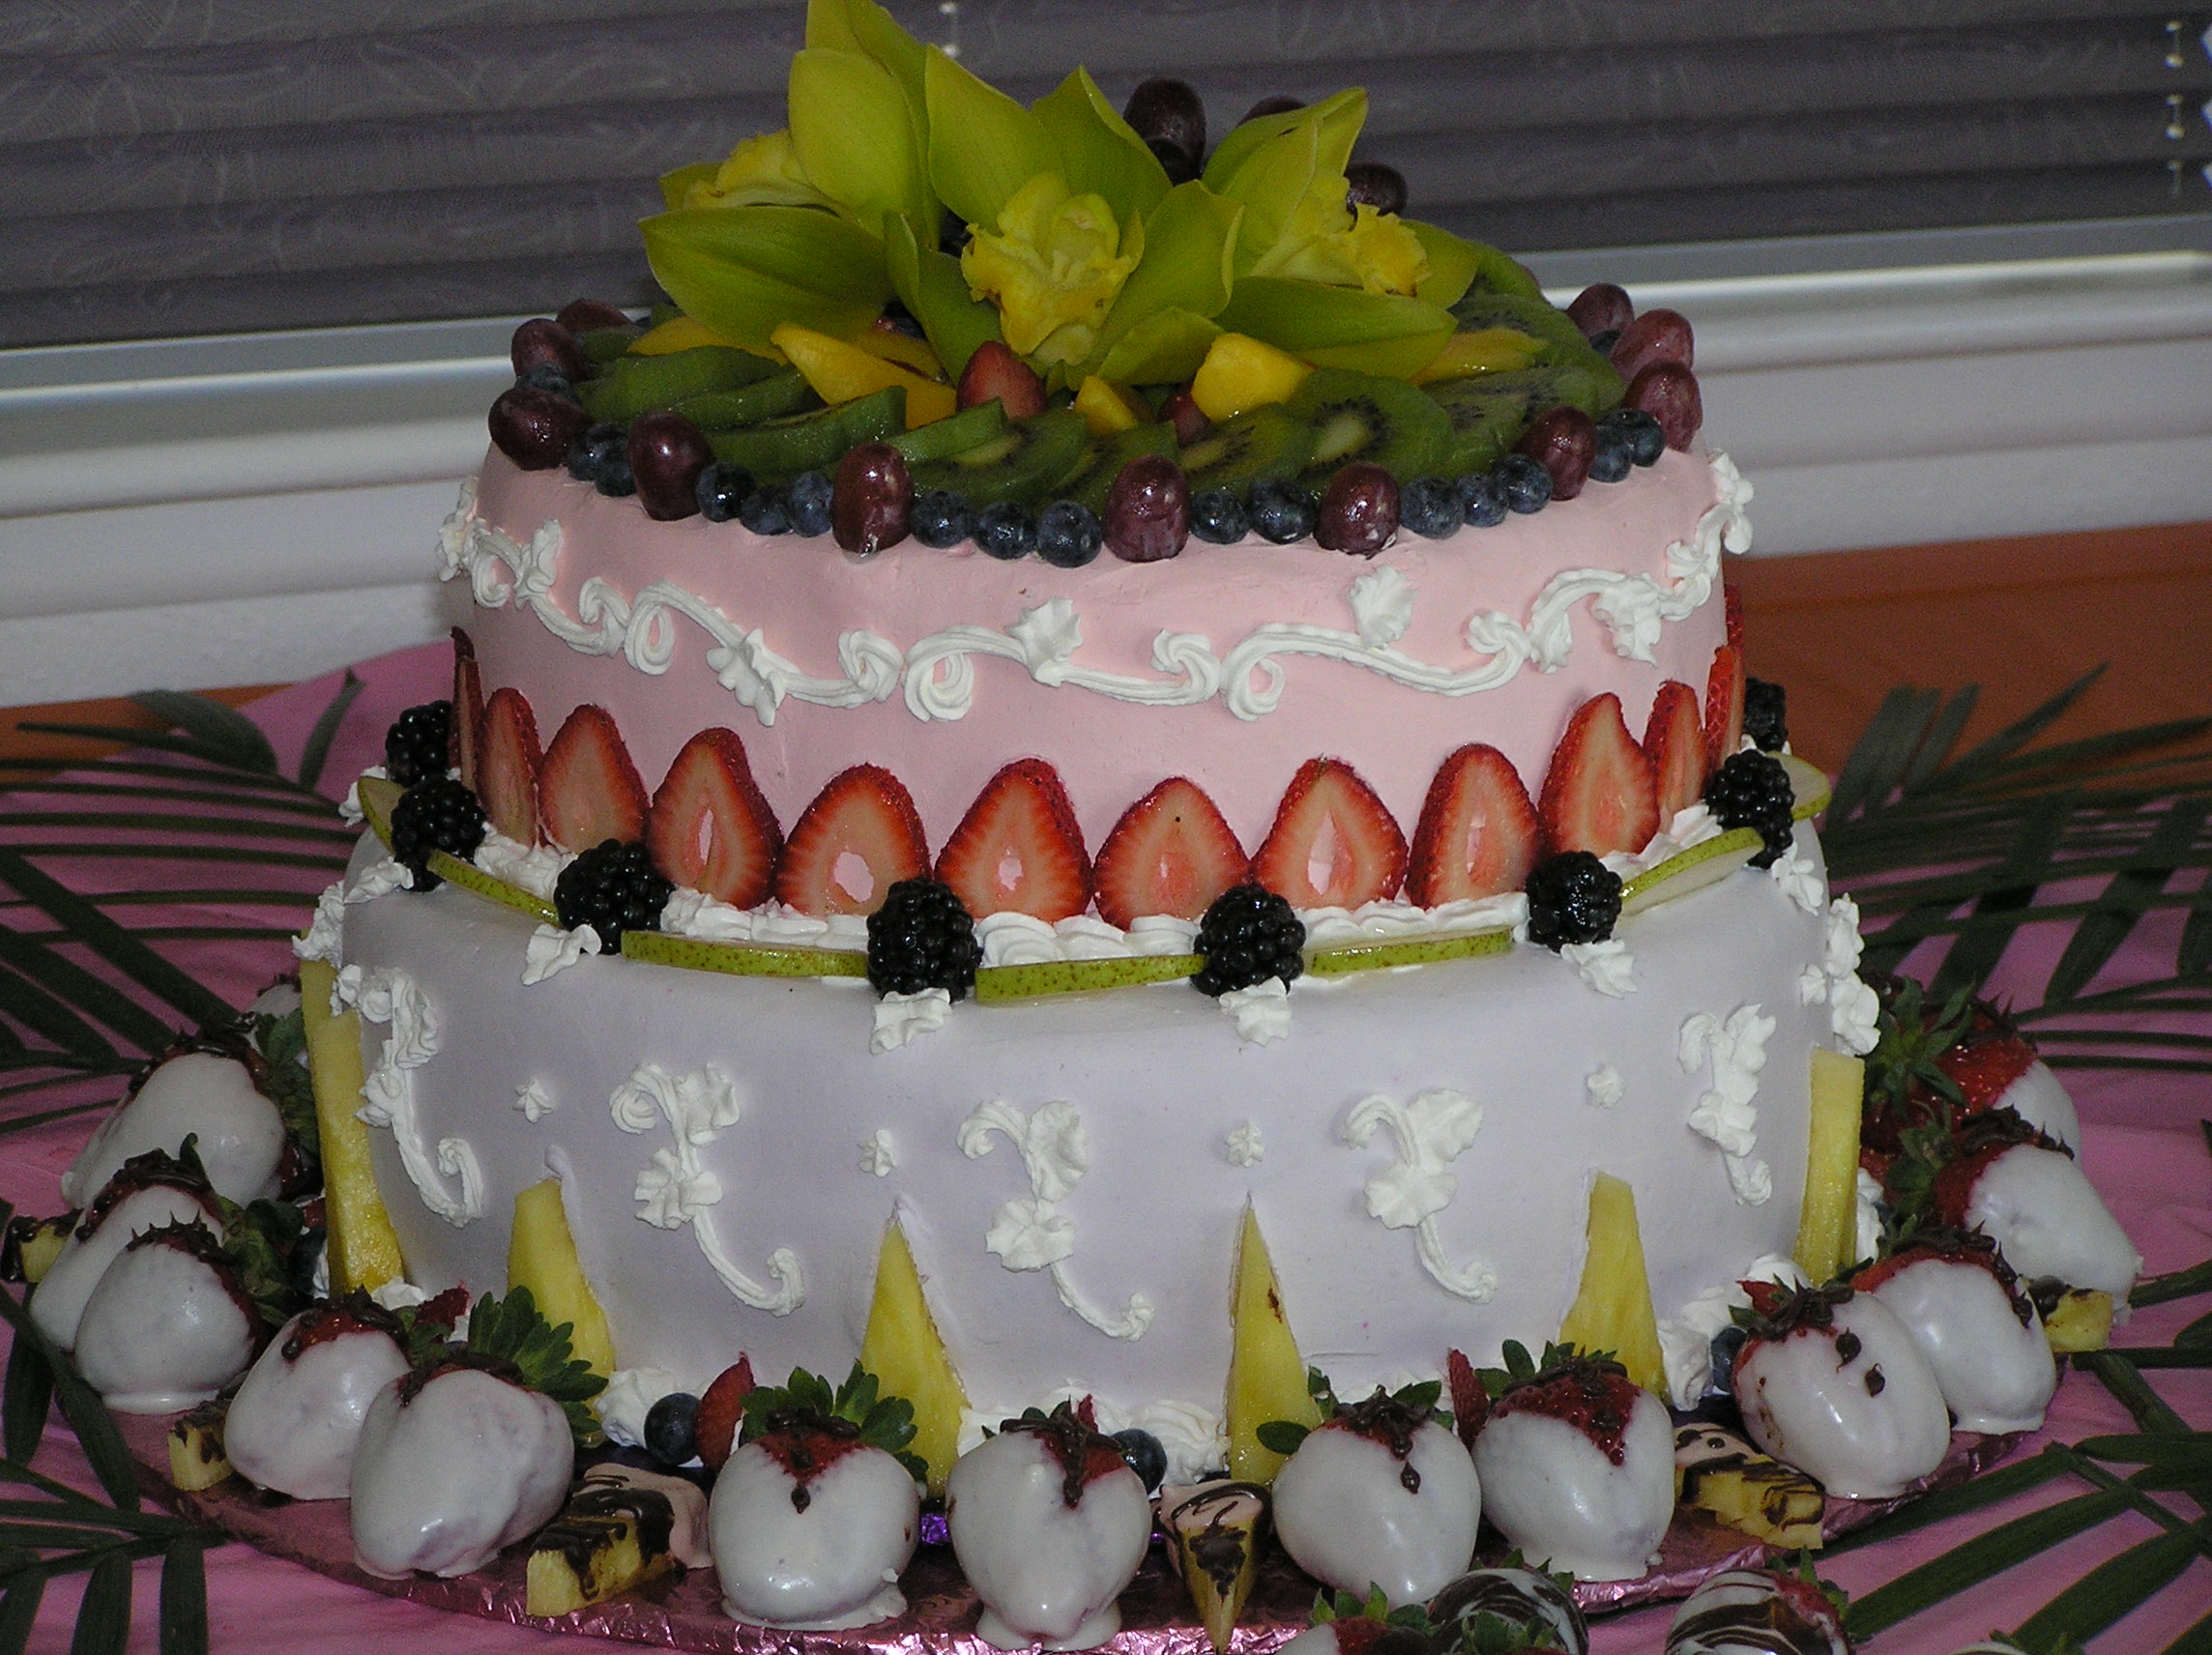 Choc Dipped Strawberries Adorn This Wedding Cake